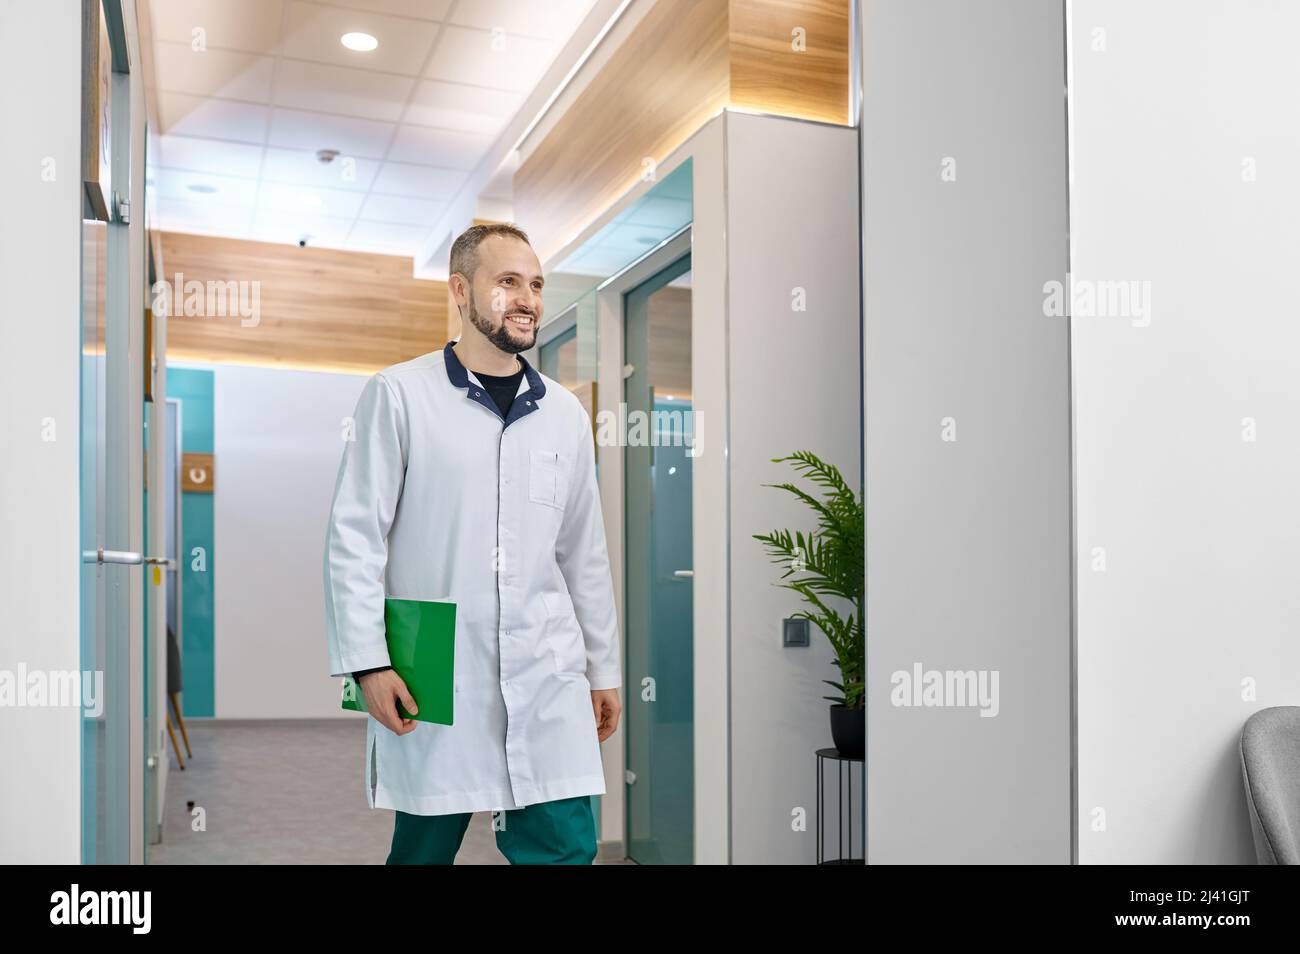 Smiling male doctor walking through hospital hallway Stock Photo